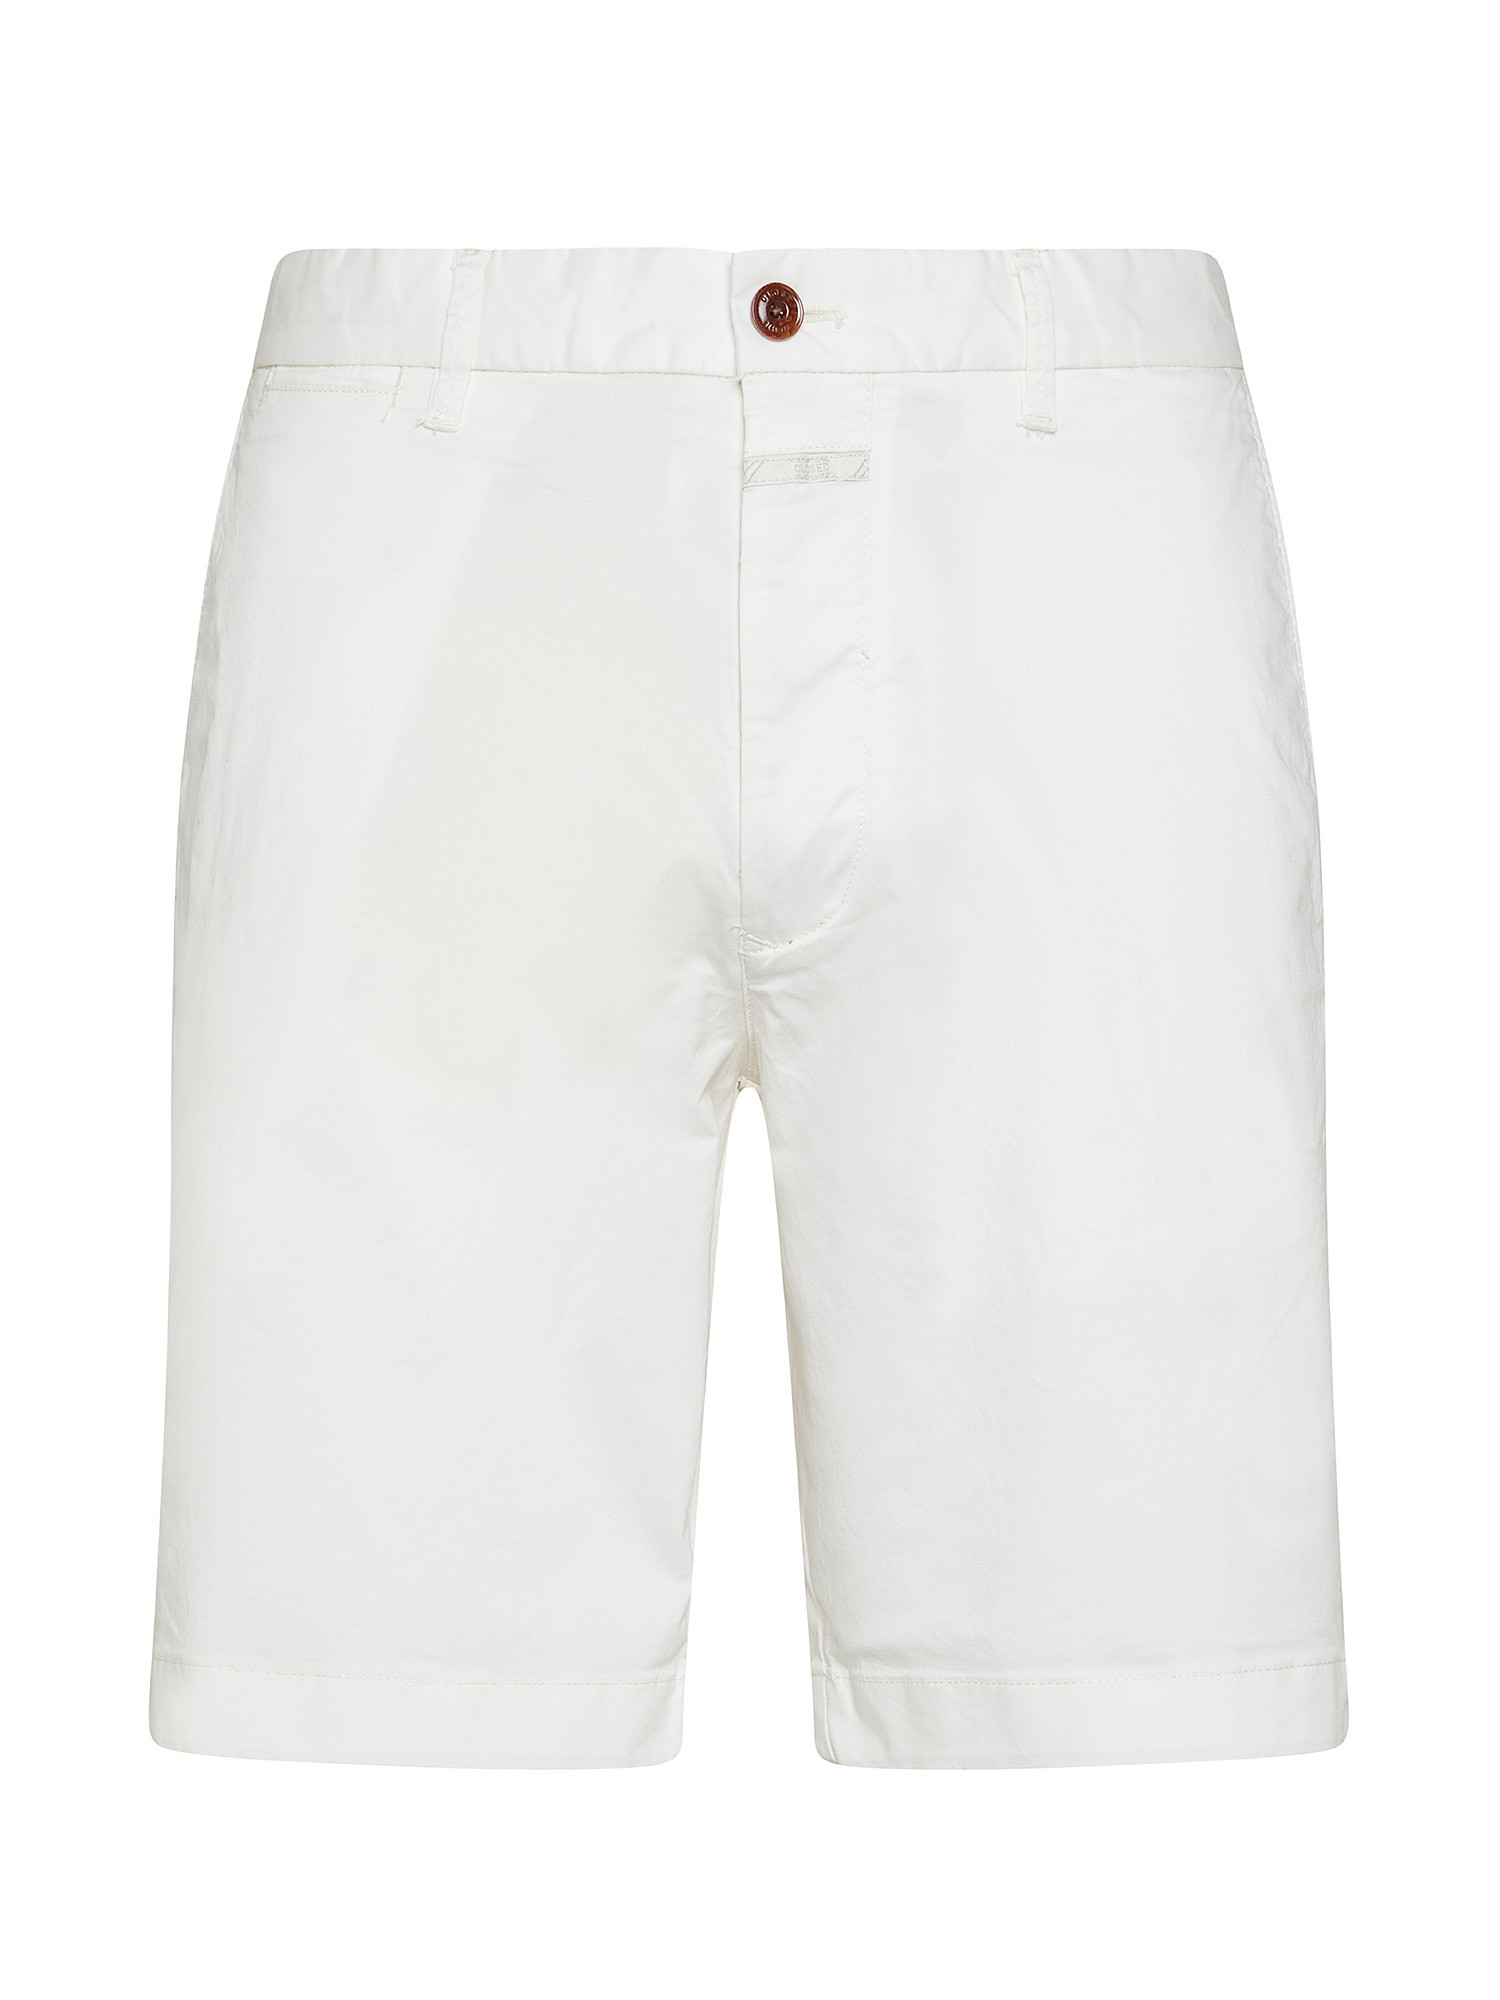 Pantaloncini chino, Bianco avorio, large image number 0